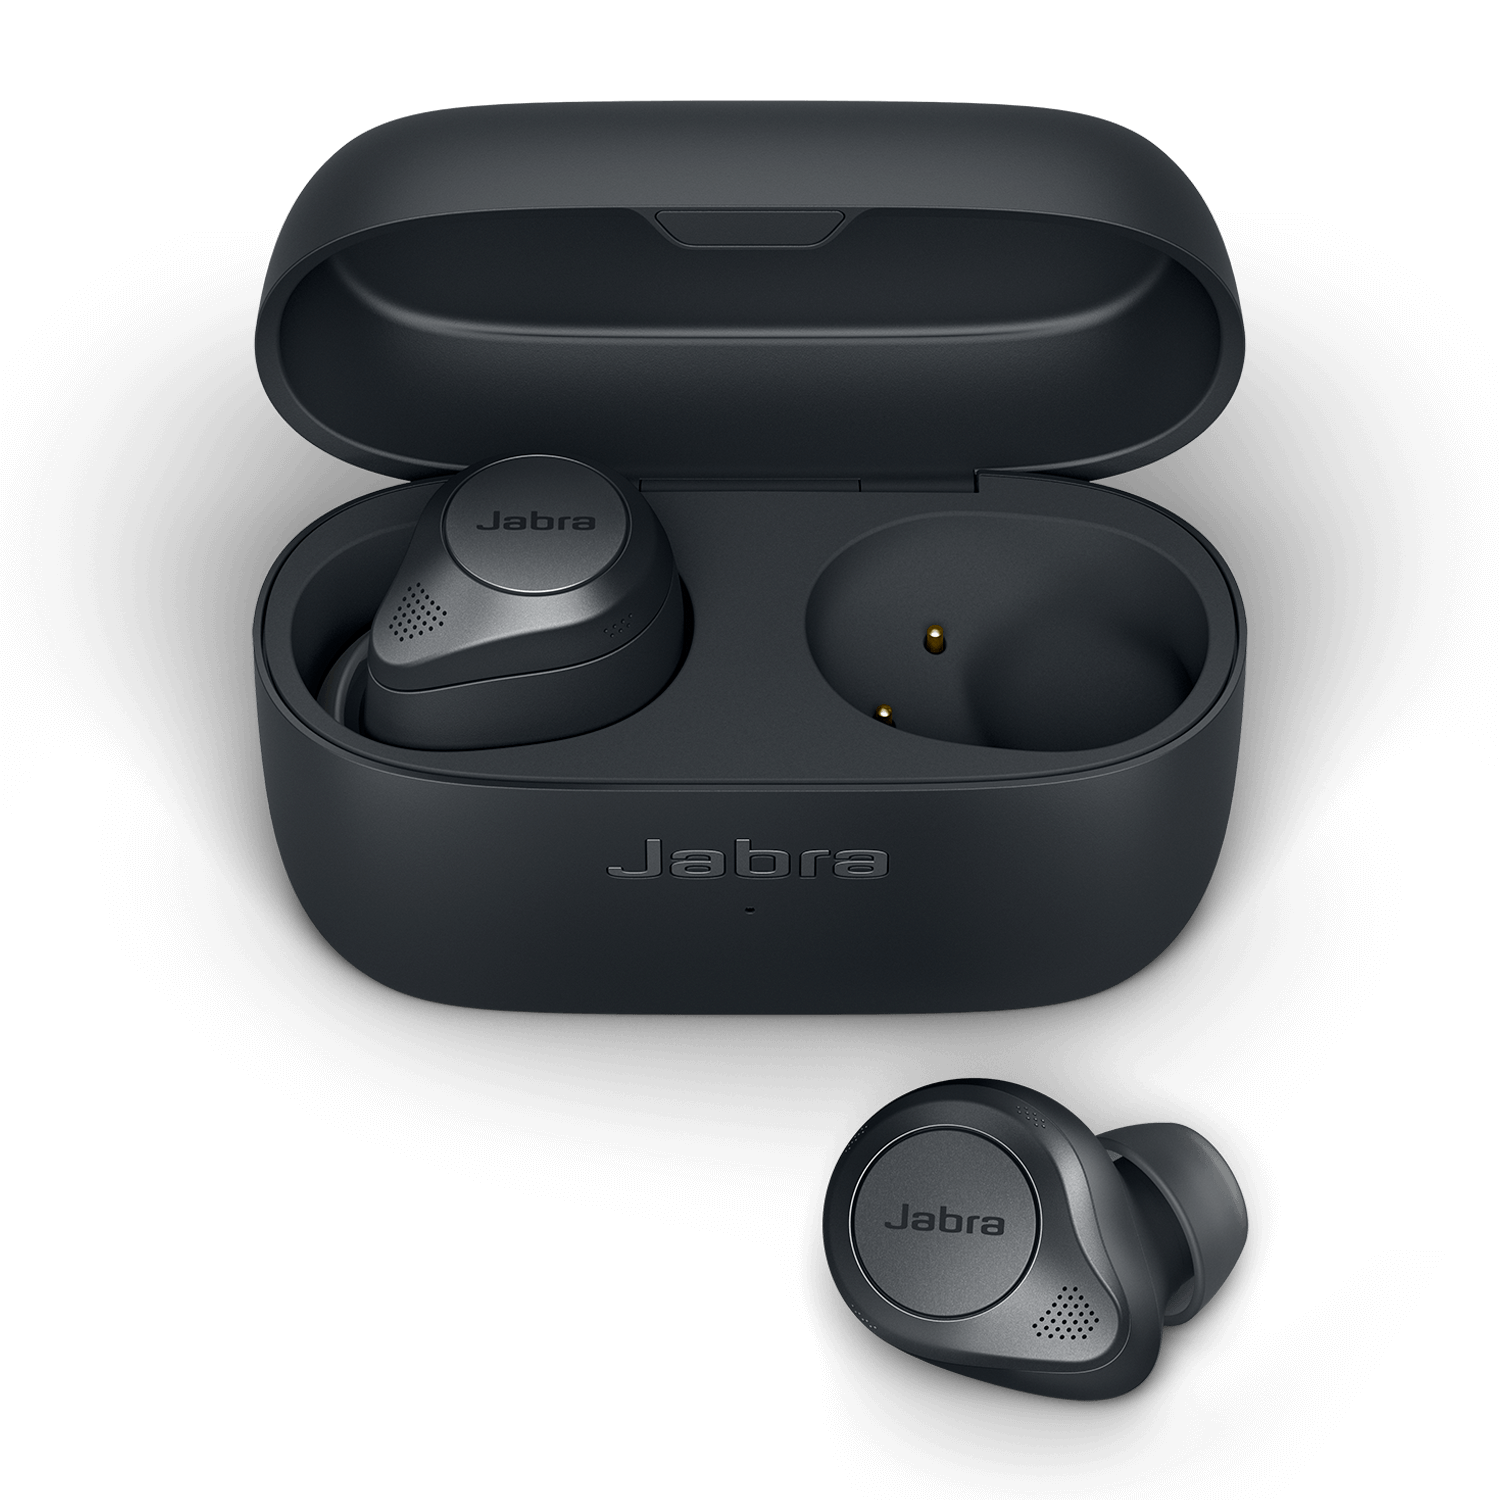 Mini TWS Kopfhörer Bluetooth 5.0 Kabellos In-Ear Stereo Ohrhörer Headset Ladebox 